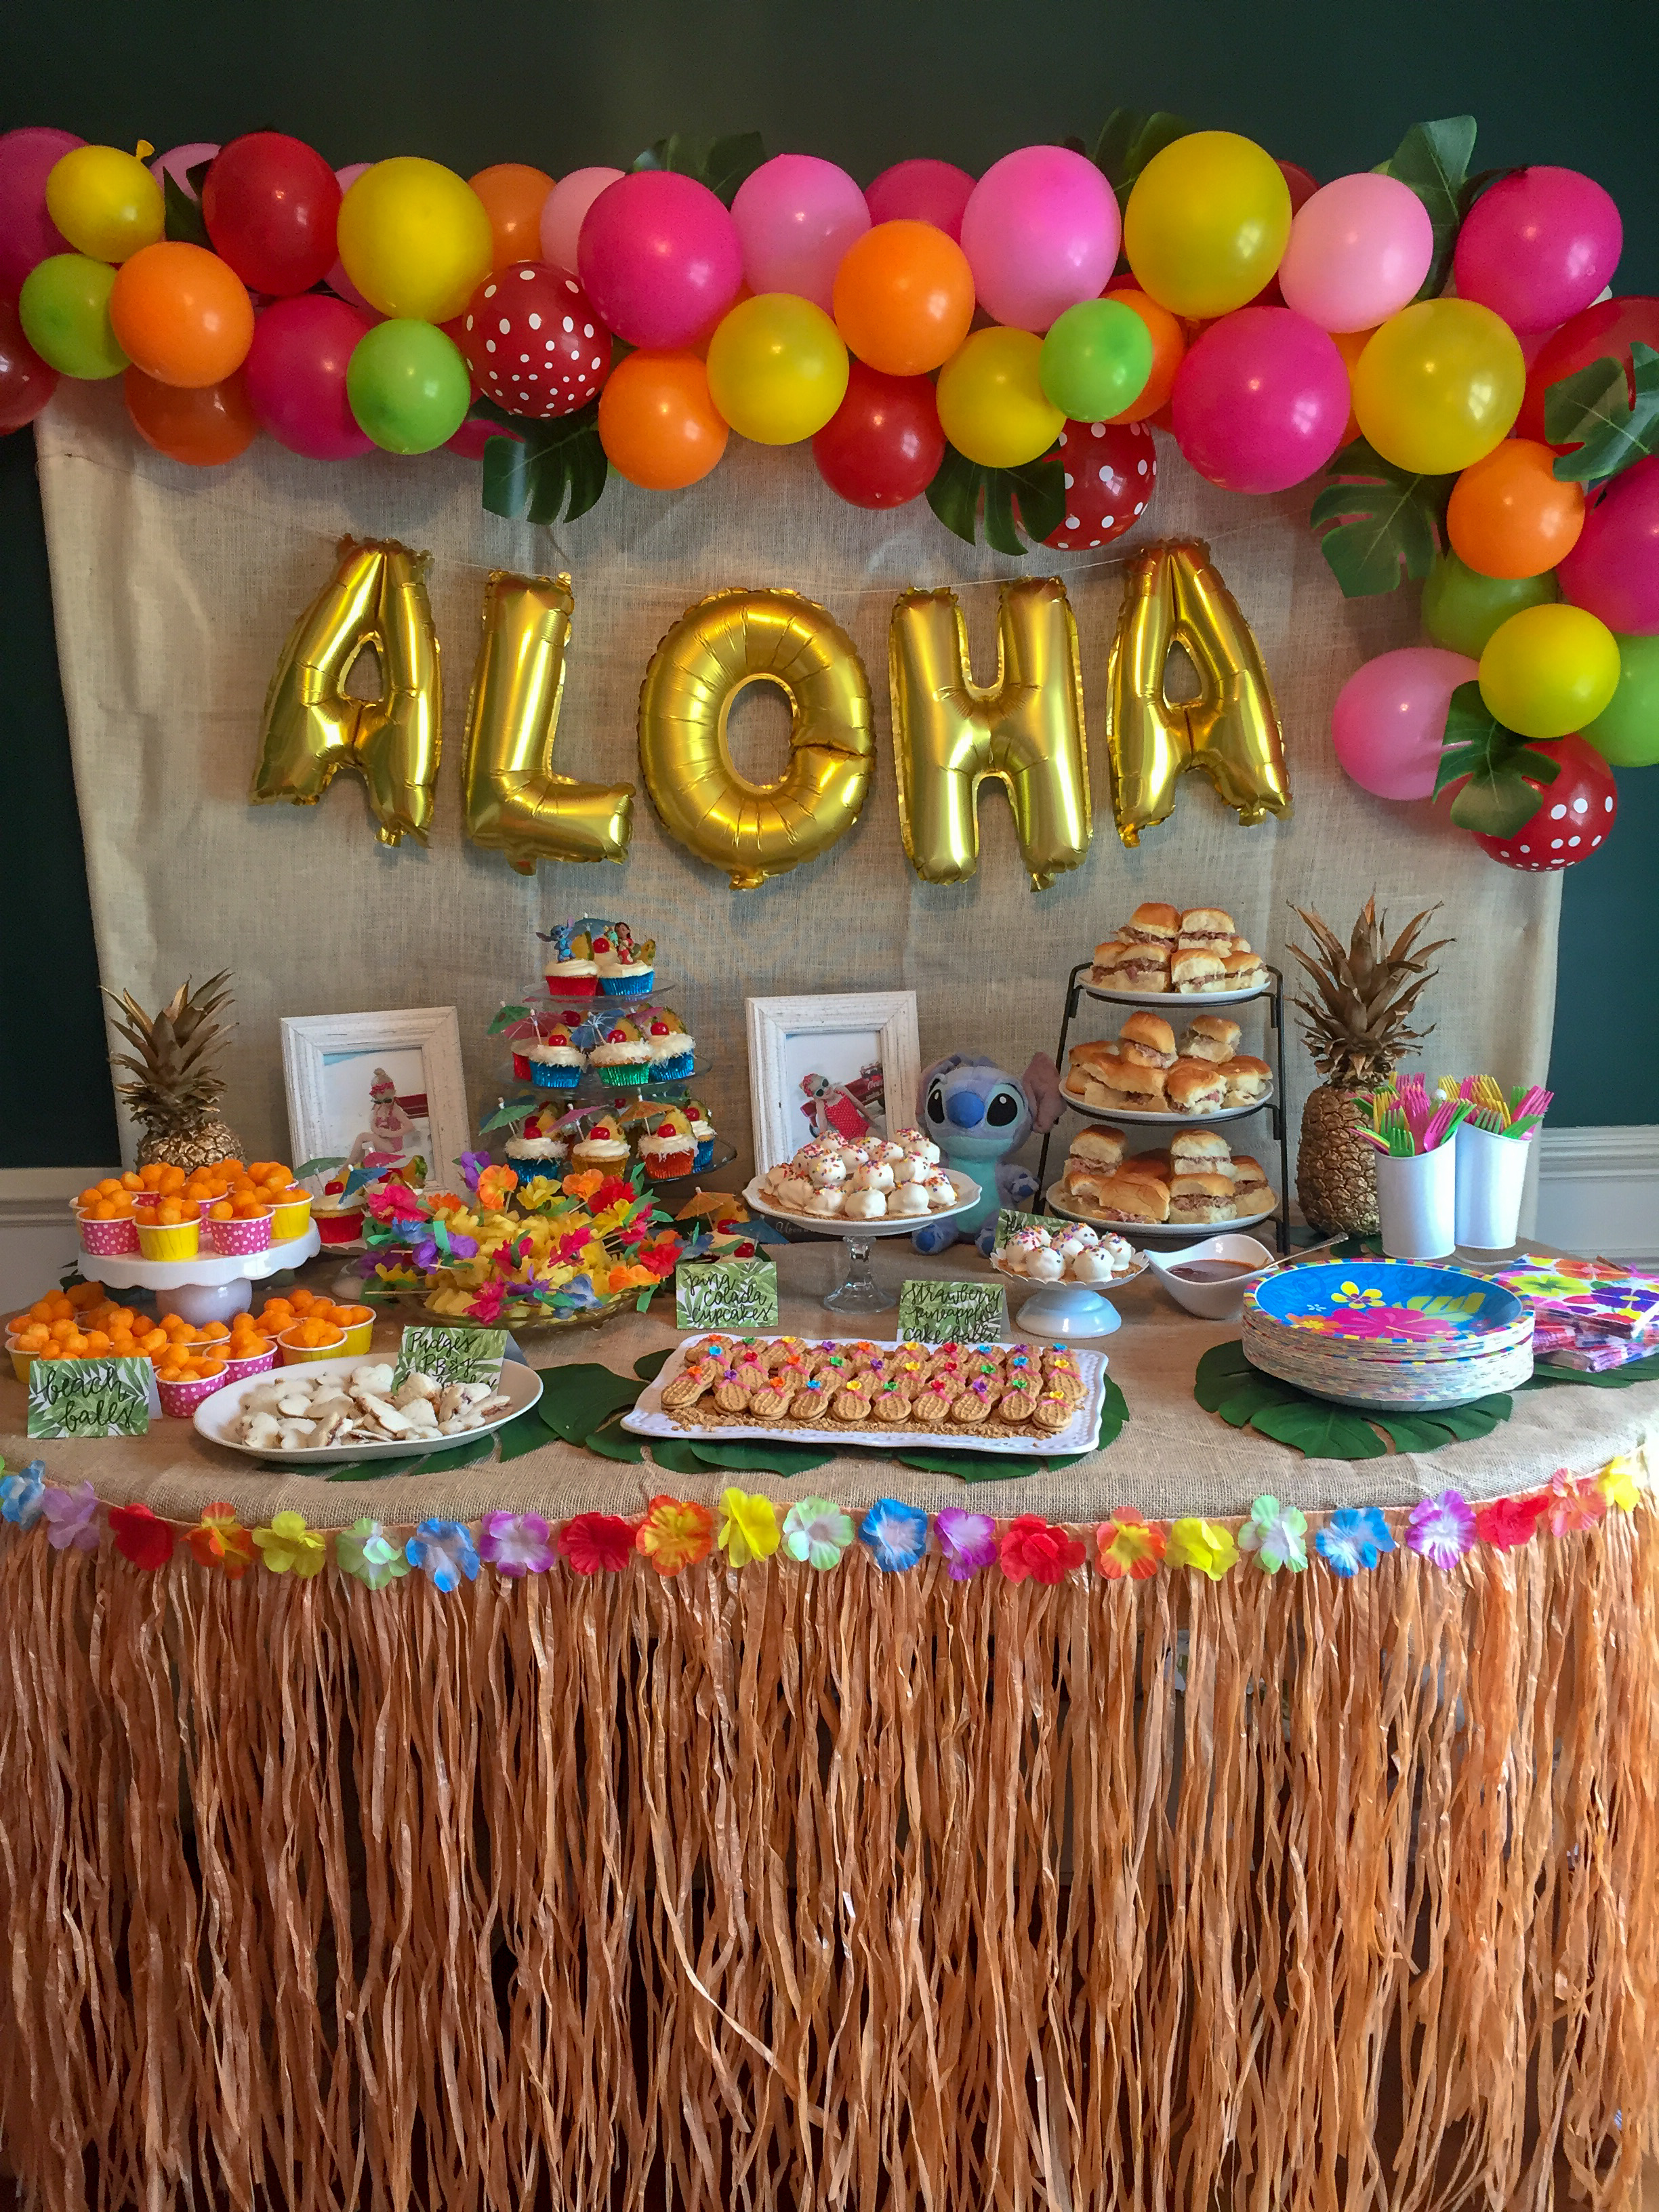 Stitch Theme Decoration For Kids Birthday Party